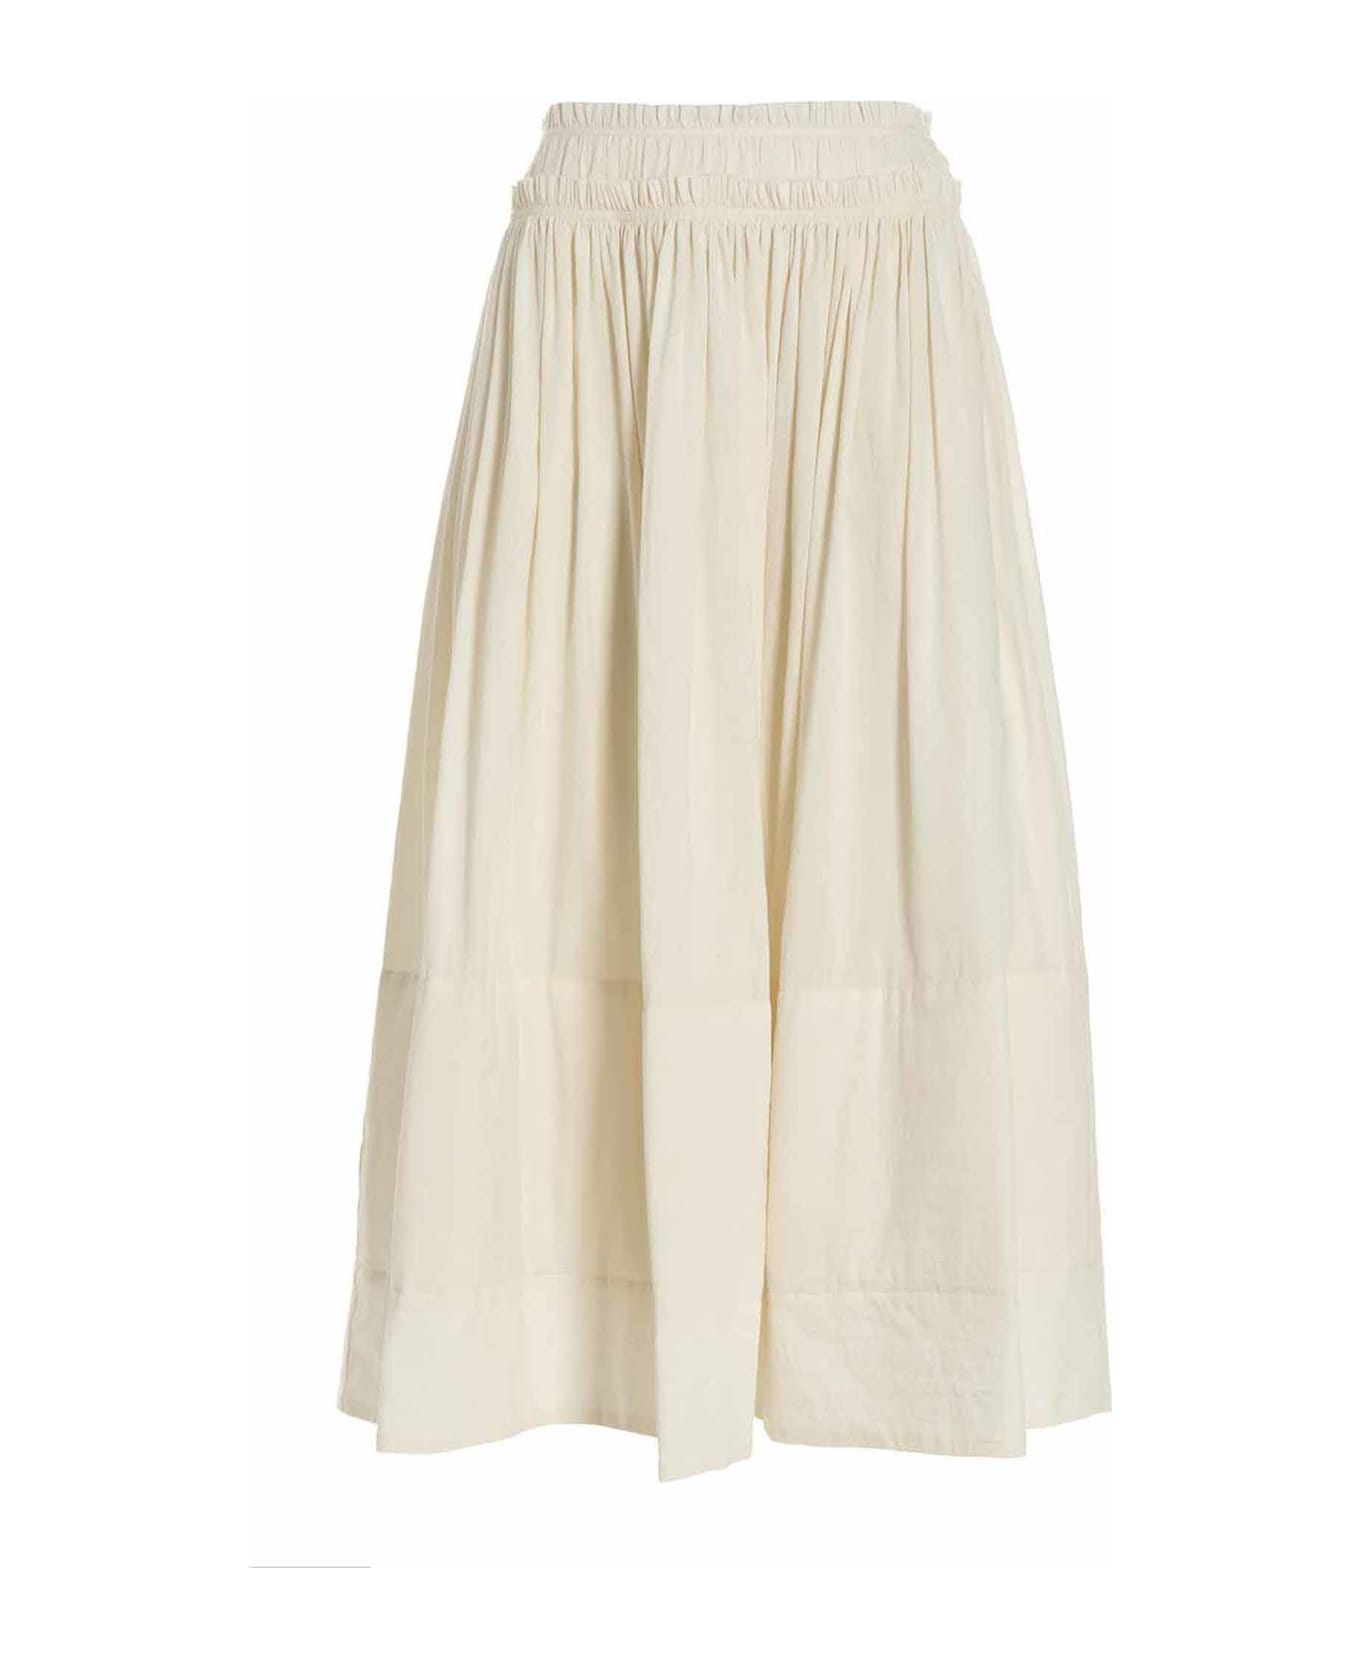 Tory Burch 'rouched Waist' Skirt - White